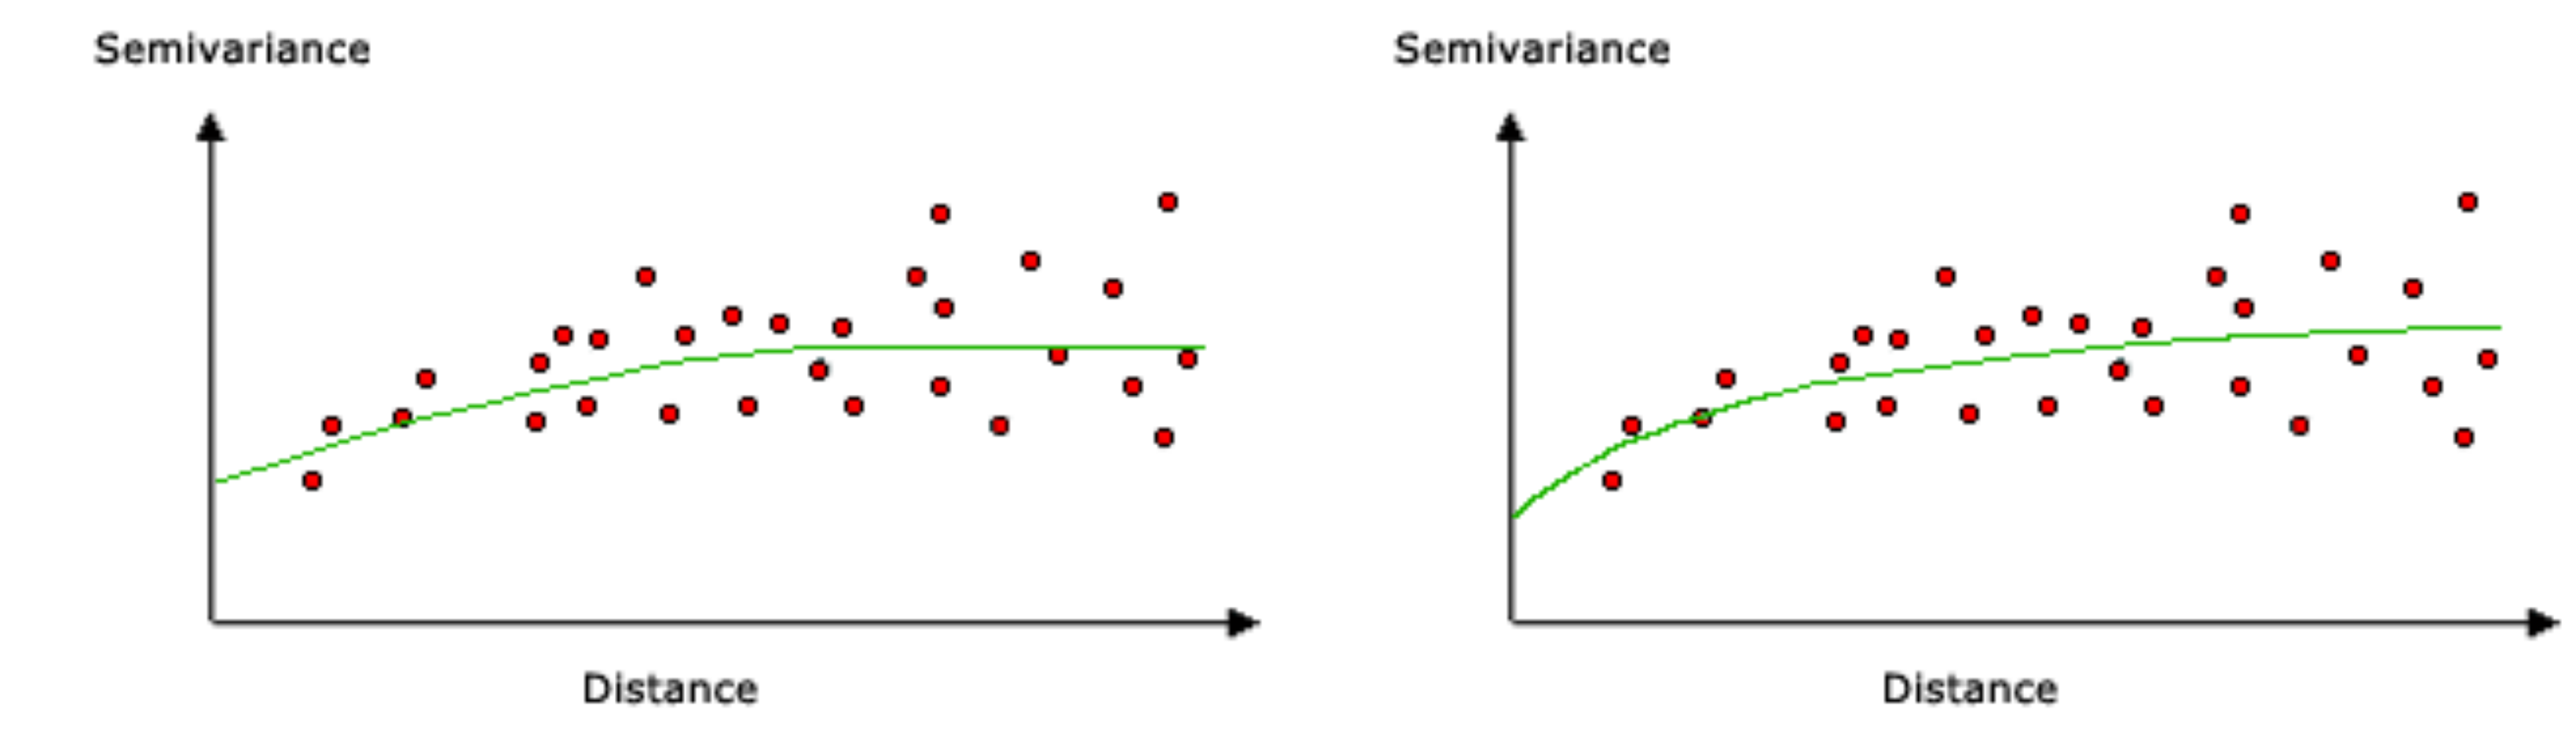 Variogram models: spherical (left) and exponential (right)^[http://desktop.arcgis.com/en/arcmap/10.3/tools/spatial-analyst-toolbox/how-kriging-works.htm]